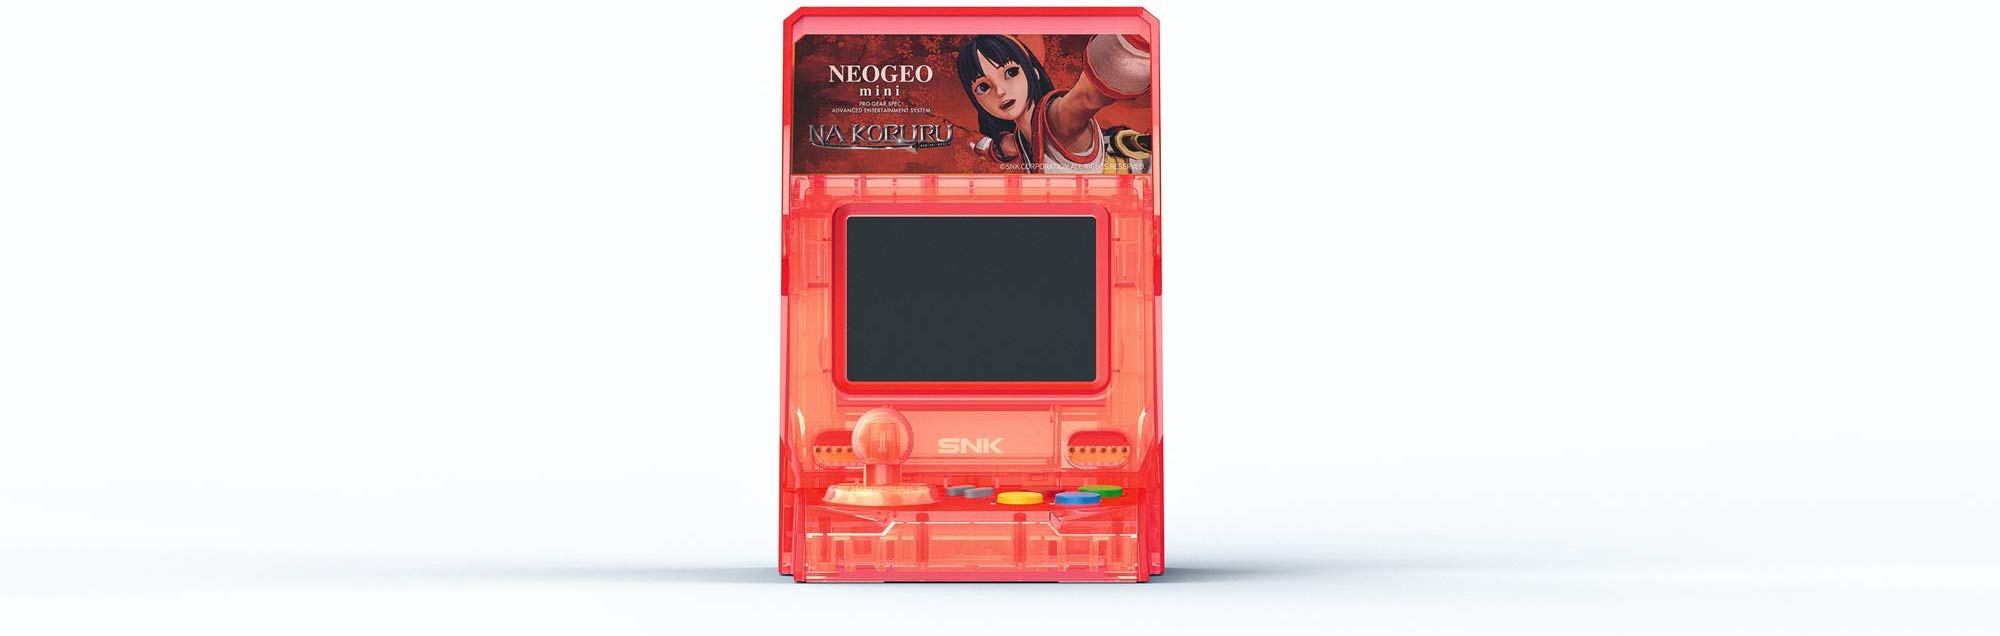 SNK NEOGEO Samurai Shodown Limited Edition Mini Console - Nakoruru Red [Retro System]